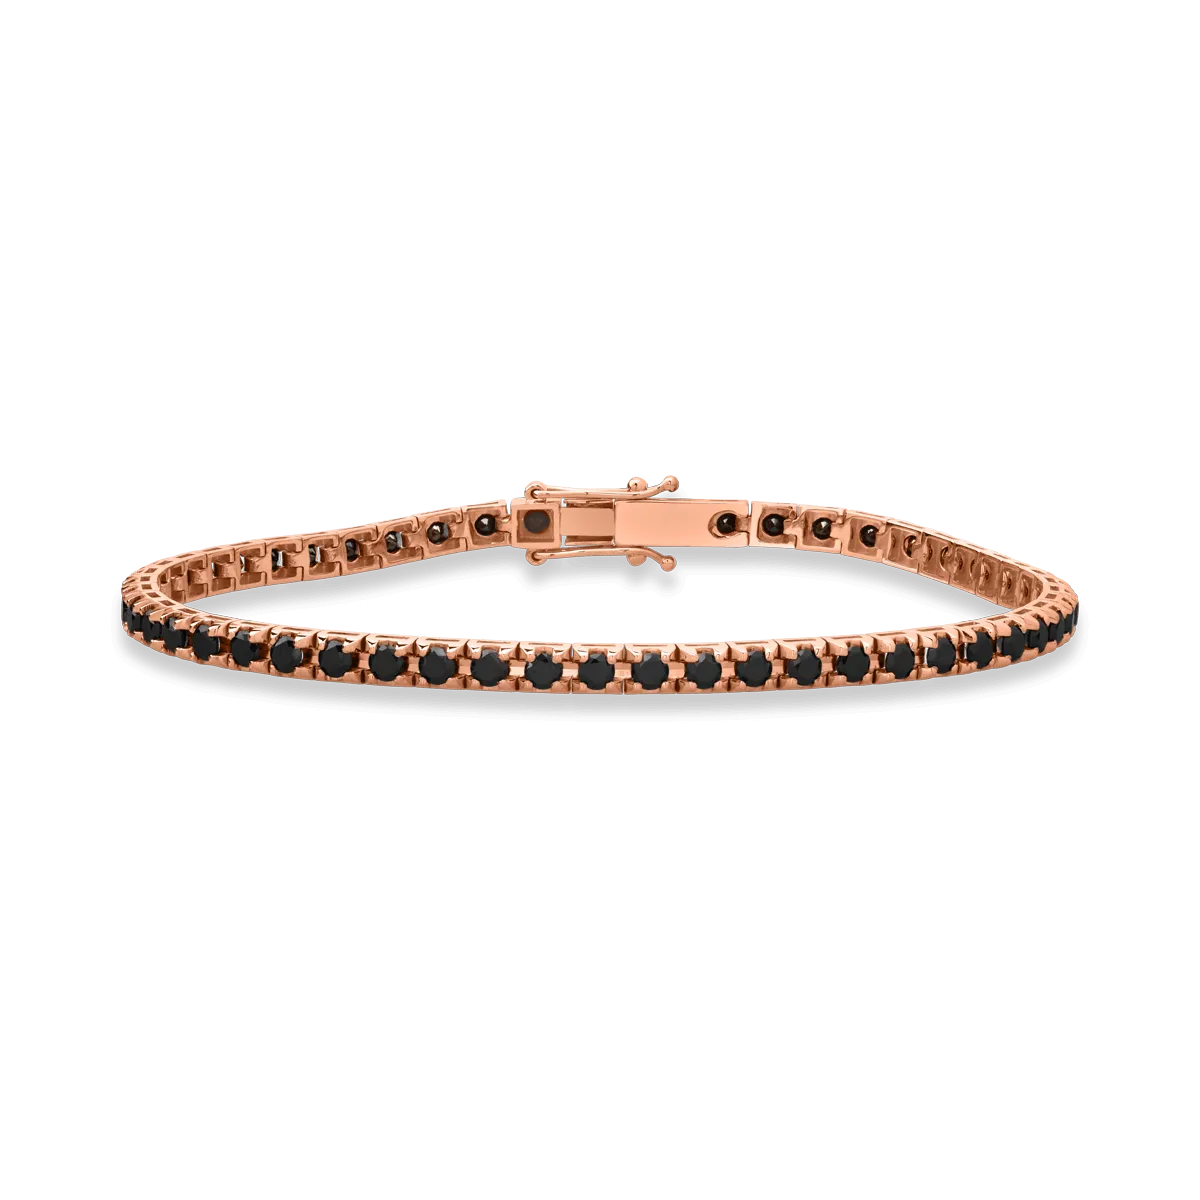 18K rose gold tennis bracelet with 2.15ct black diamonds